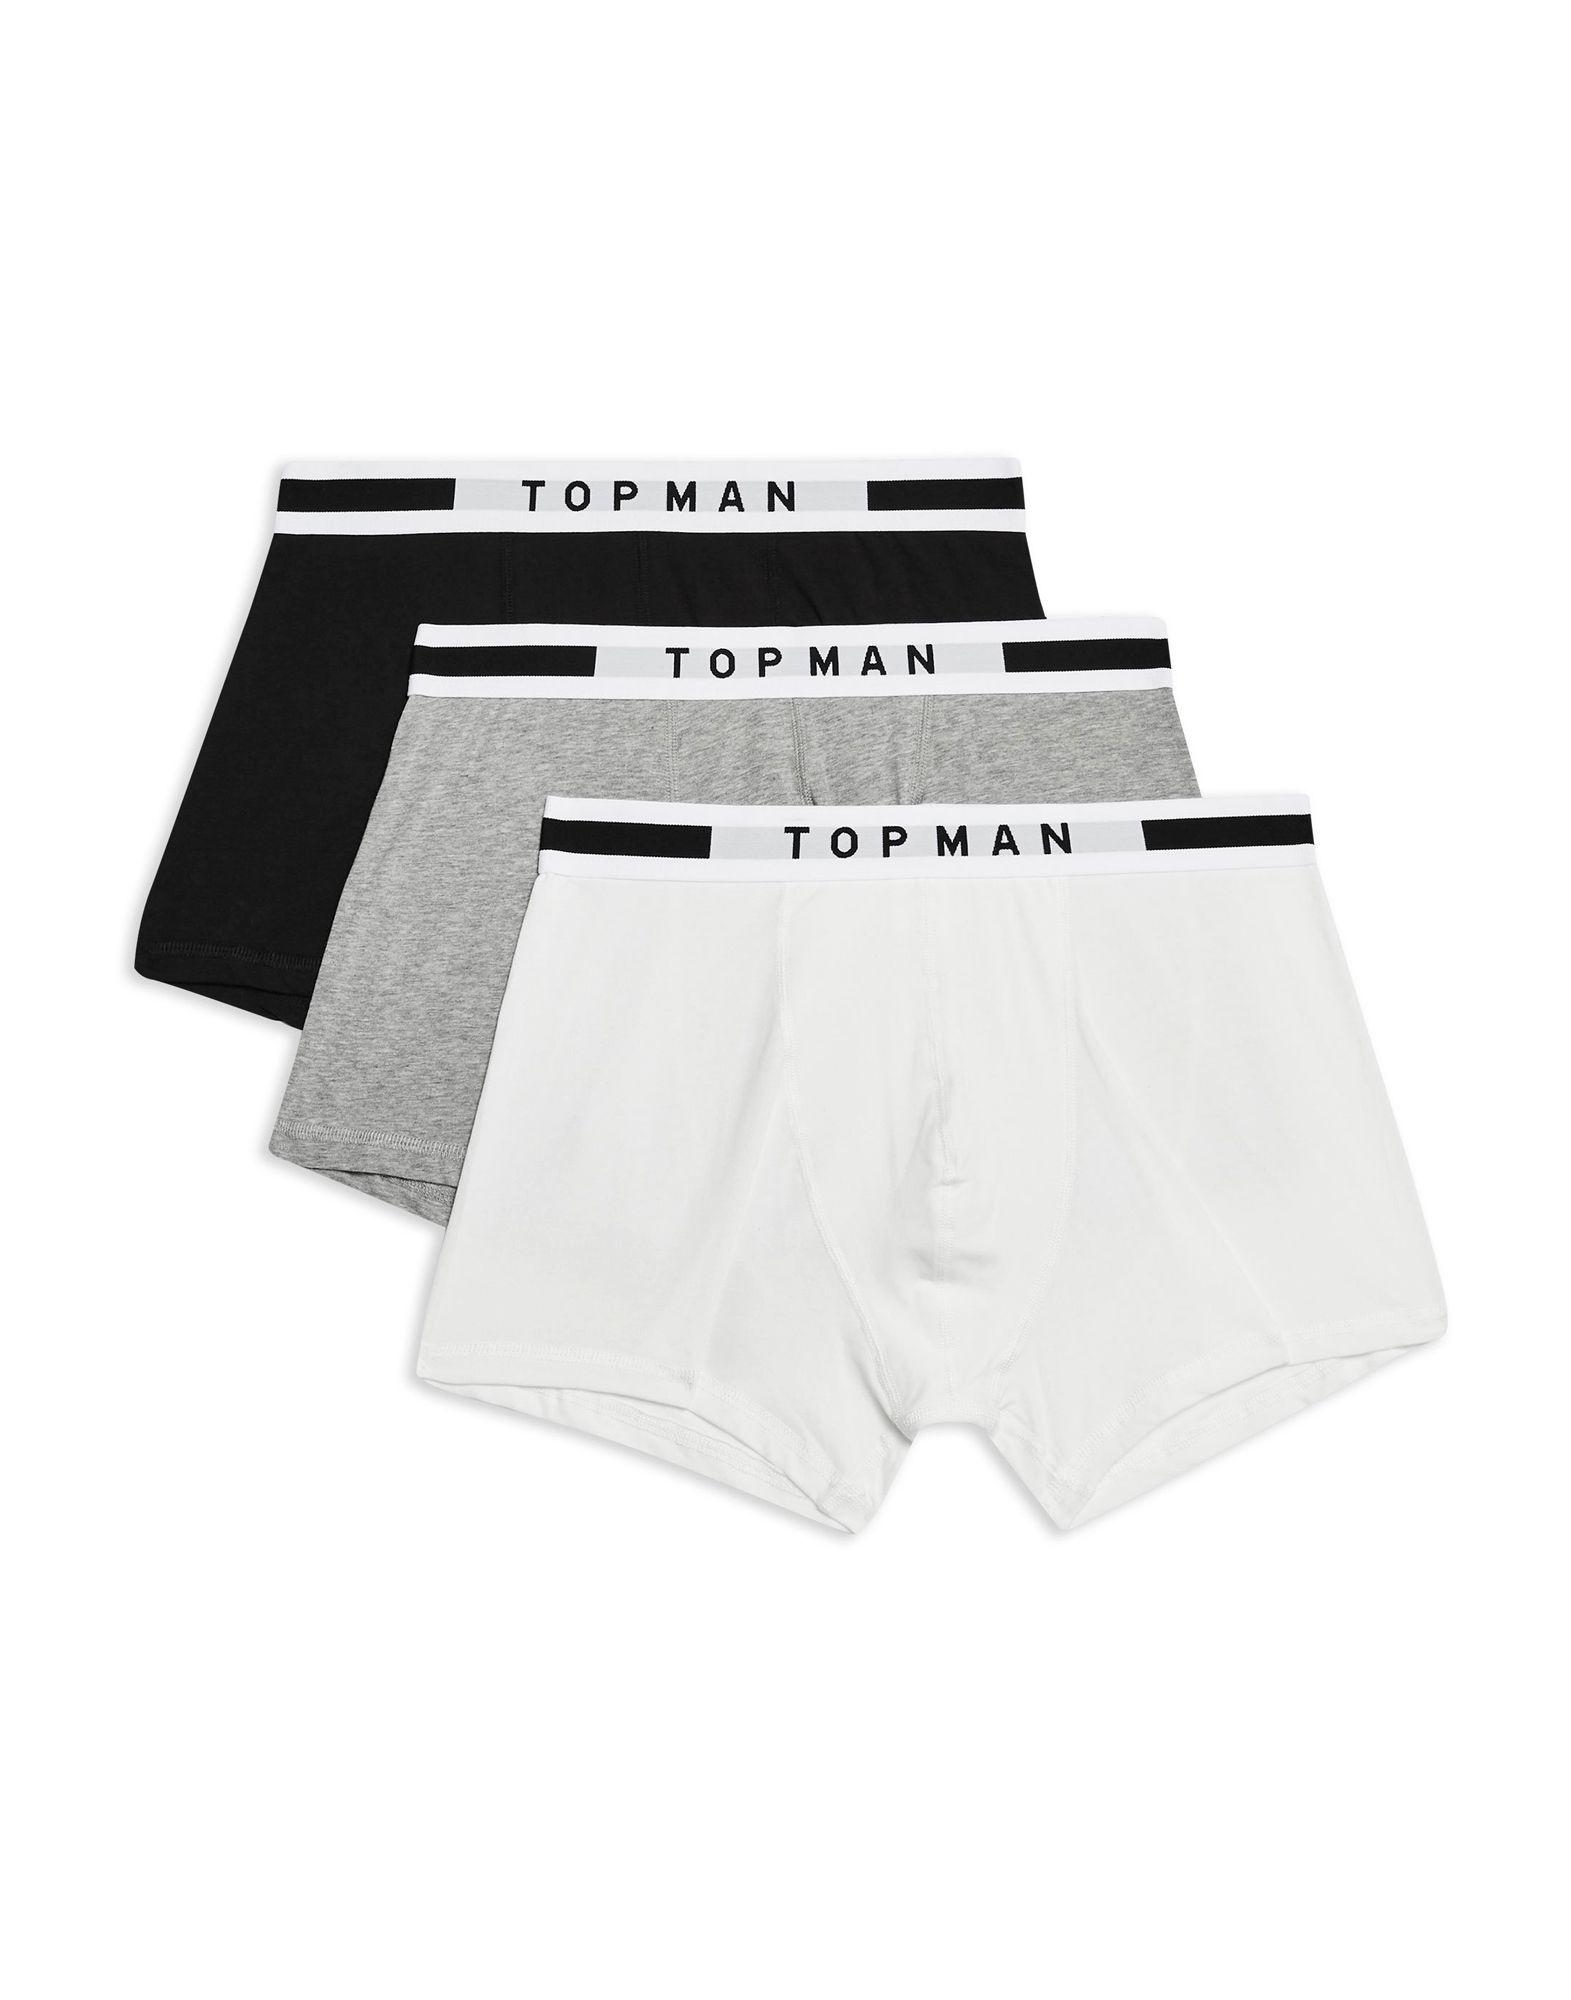 TOPMAN Cotton Boxer in White for Men - Lyst